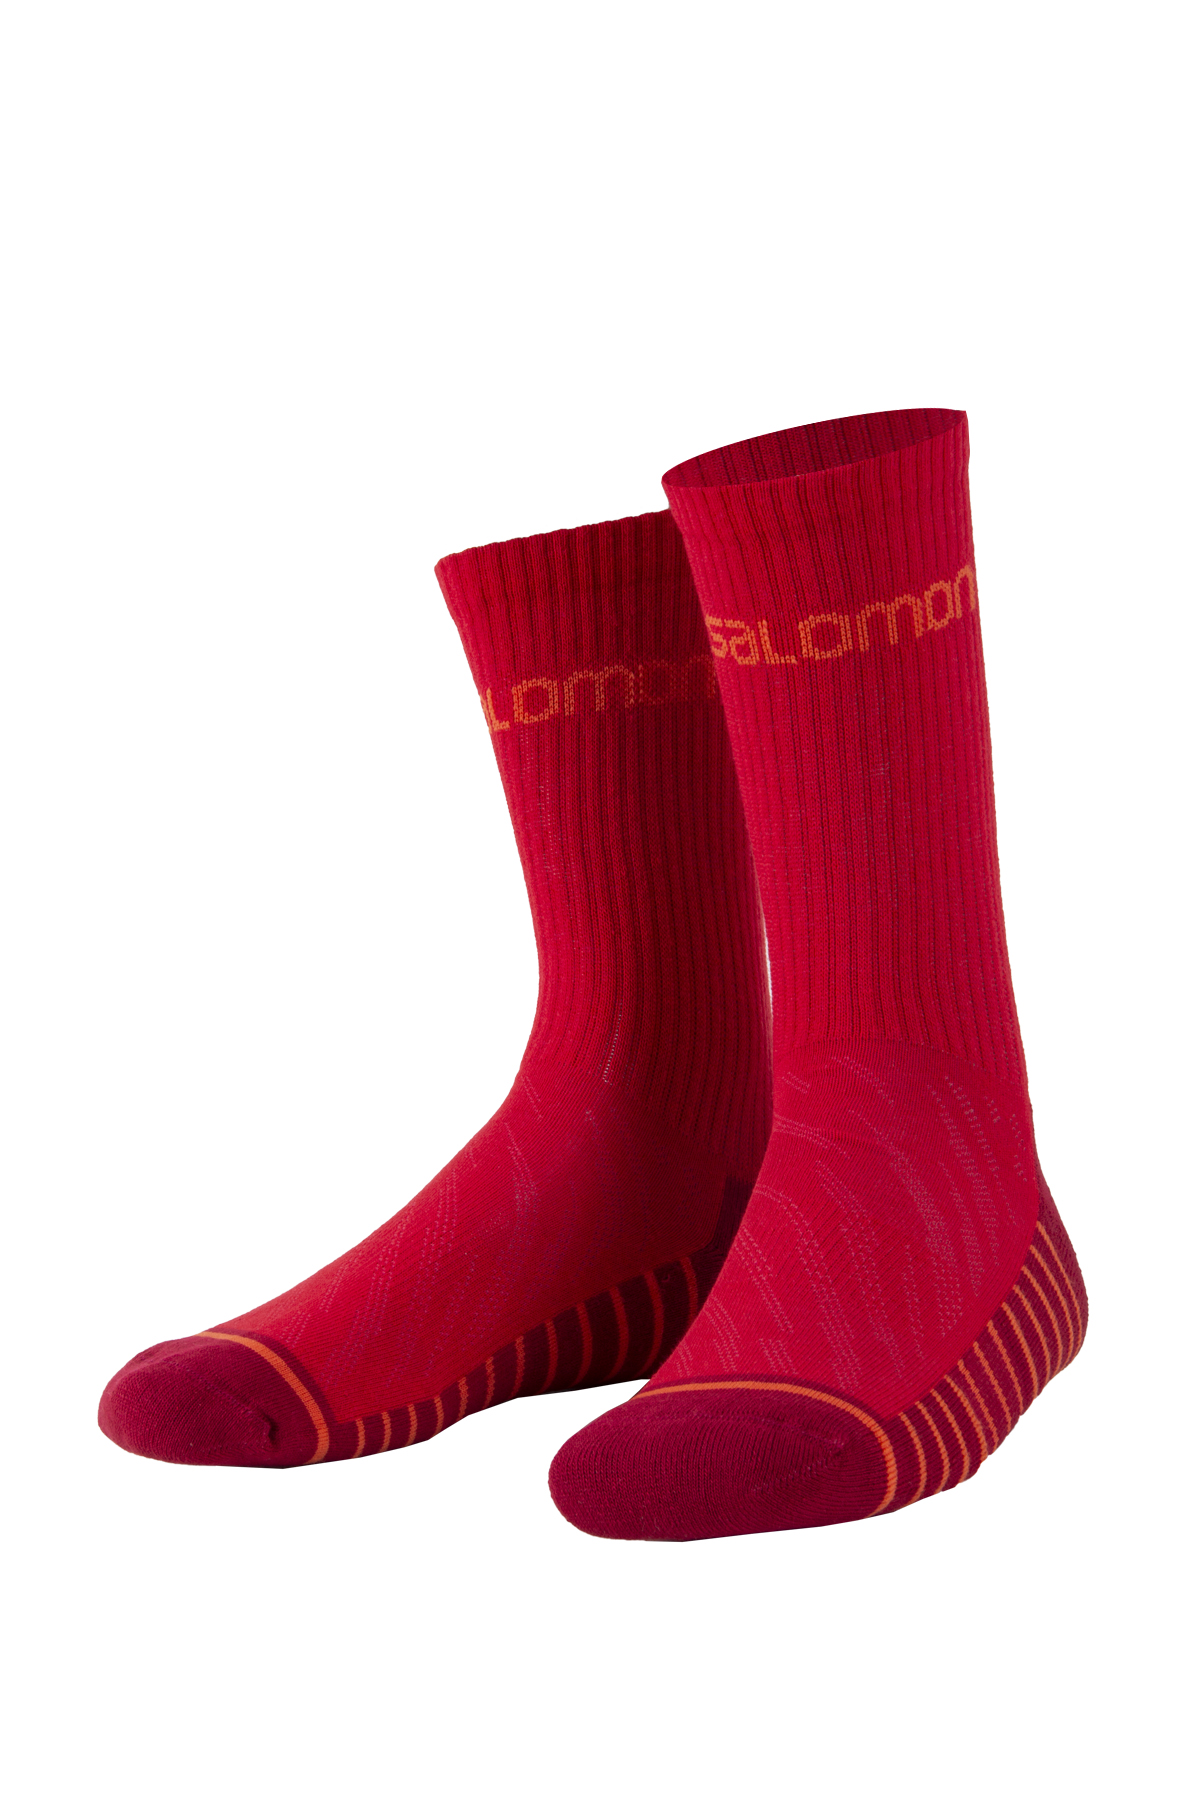 Salomon L16023 - Life 2P Outdoor Kırmızı Çorap